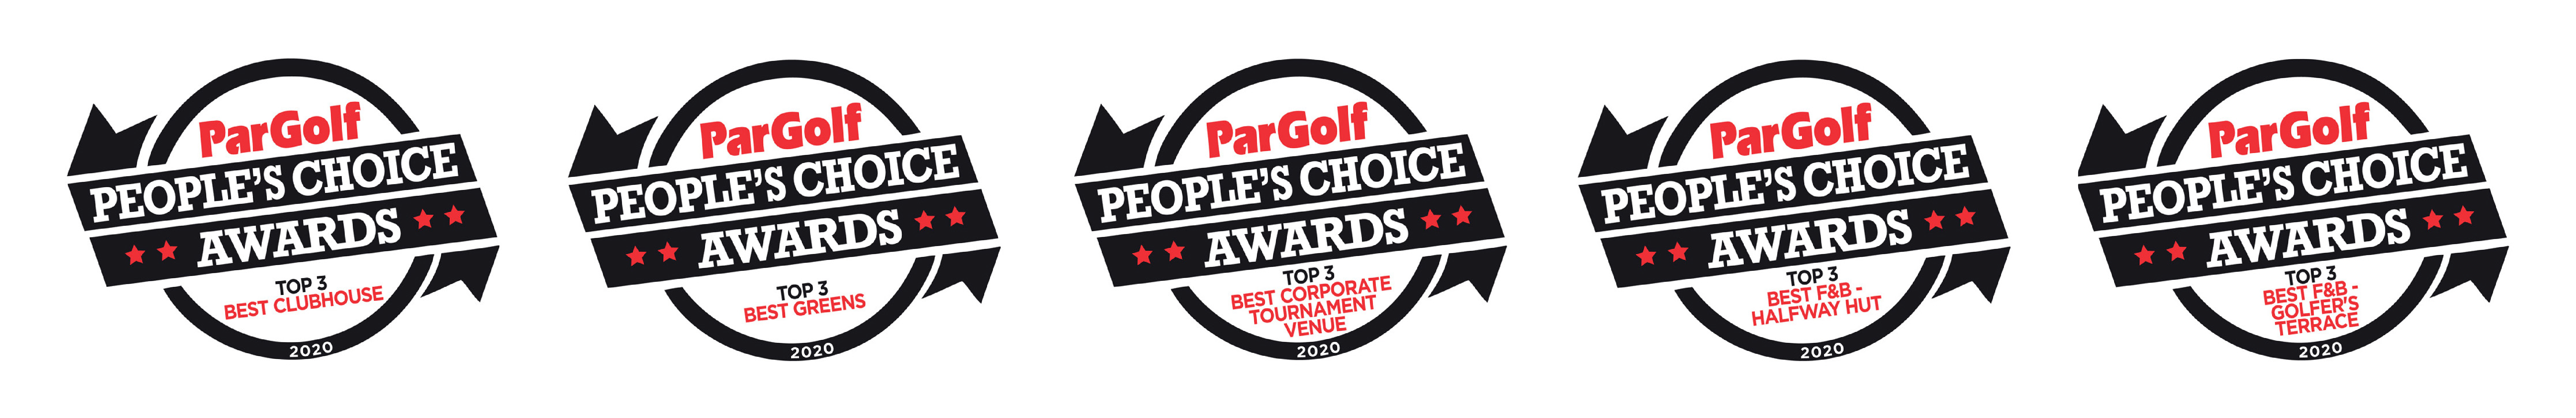 ParGolf People’s Choice Awards 2019